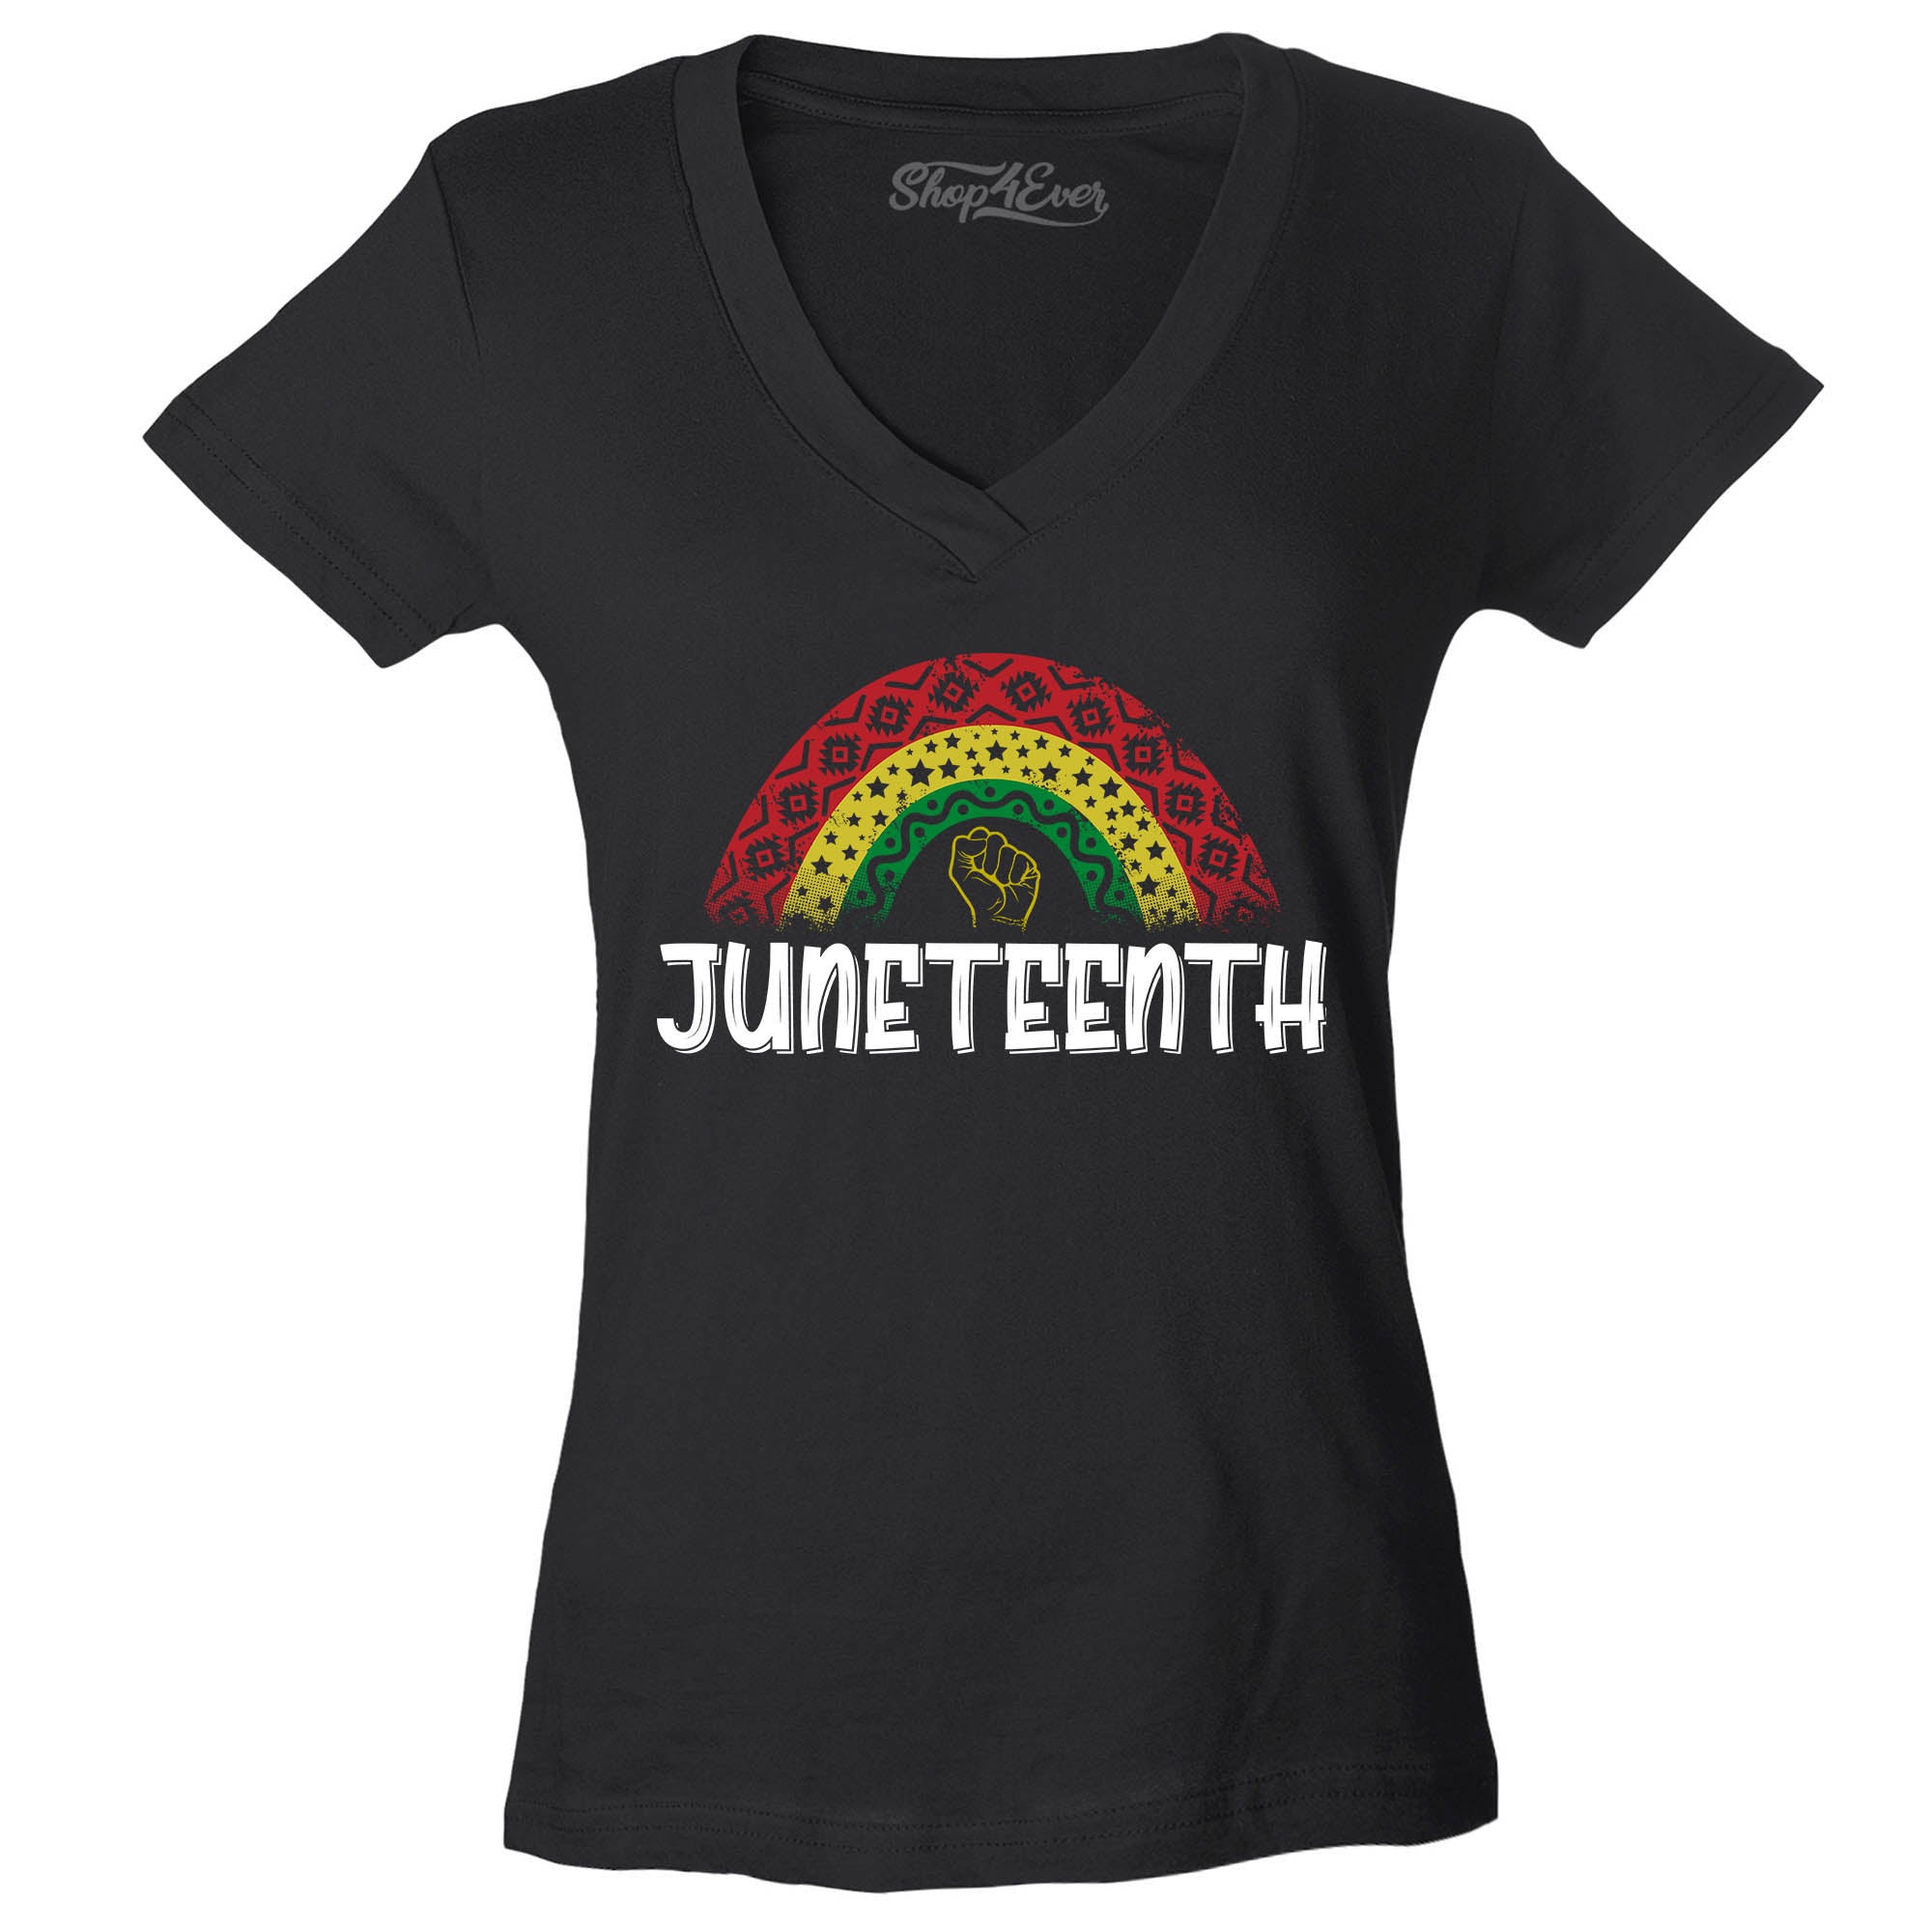 Juneteenth Rainbow June 19th 1865 Women's V-Neck T-Shirt Slim Fit